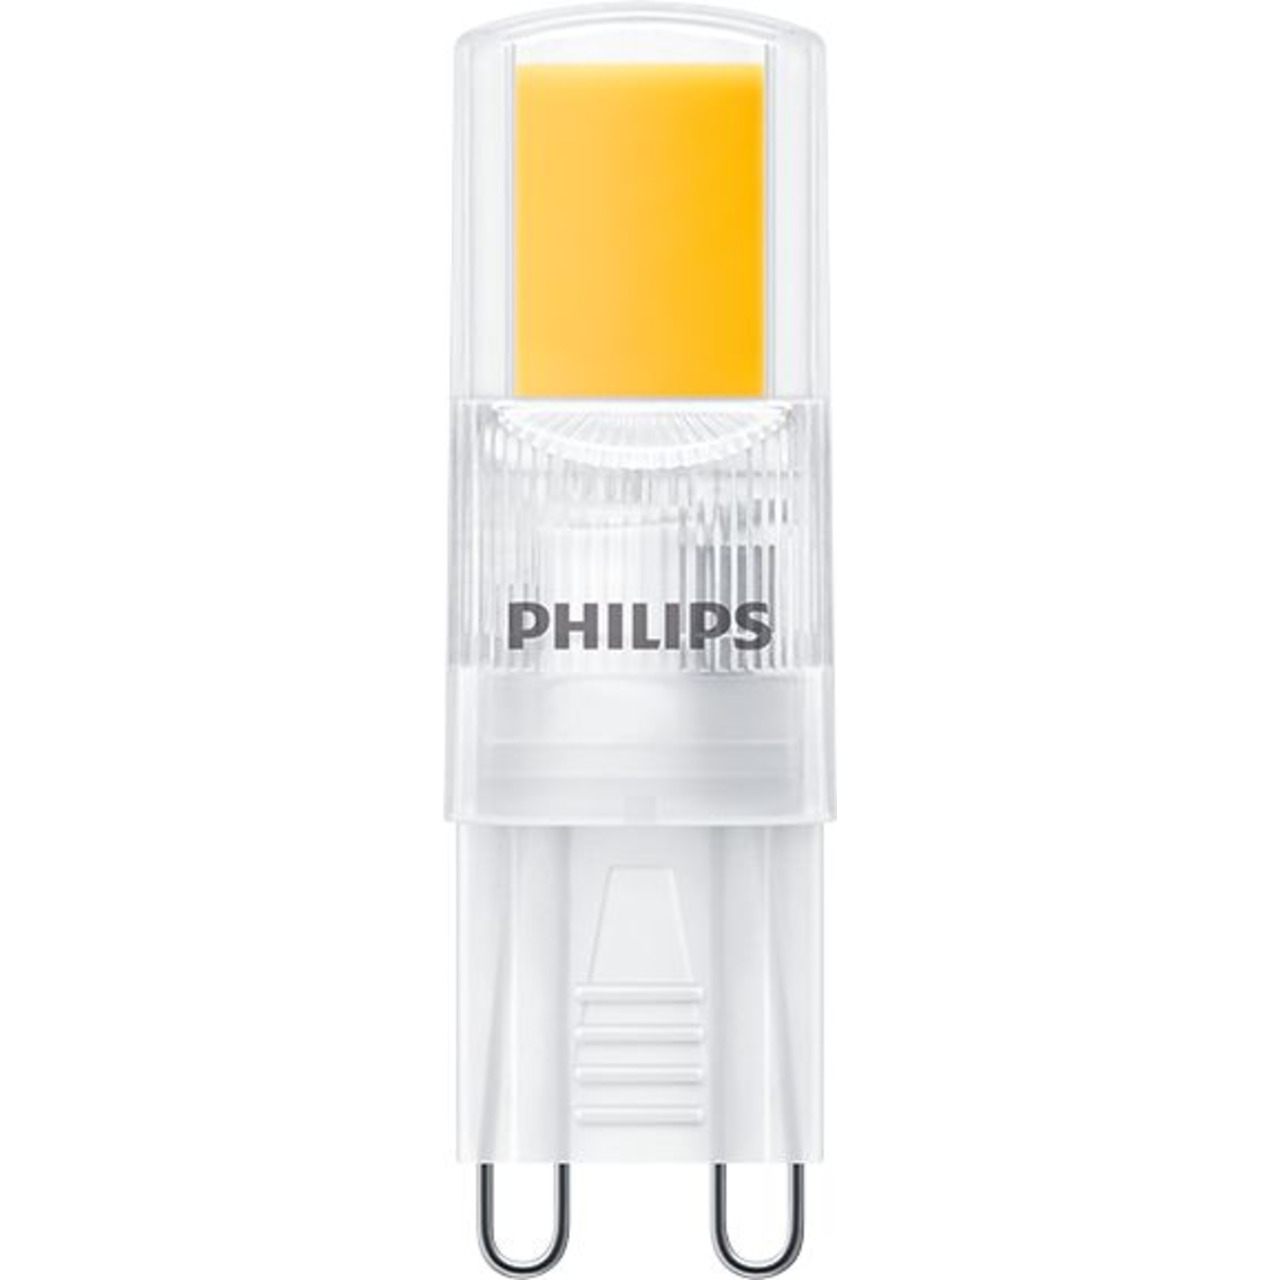 Philips 2-W-G9-LED-Lampe CorePro LEDcapsule- Stiftsockellampe- 220 lm- warmweiss- 2700 K unter Beleuchtung